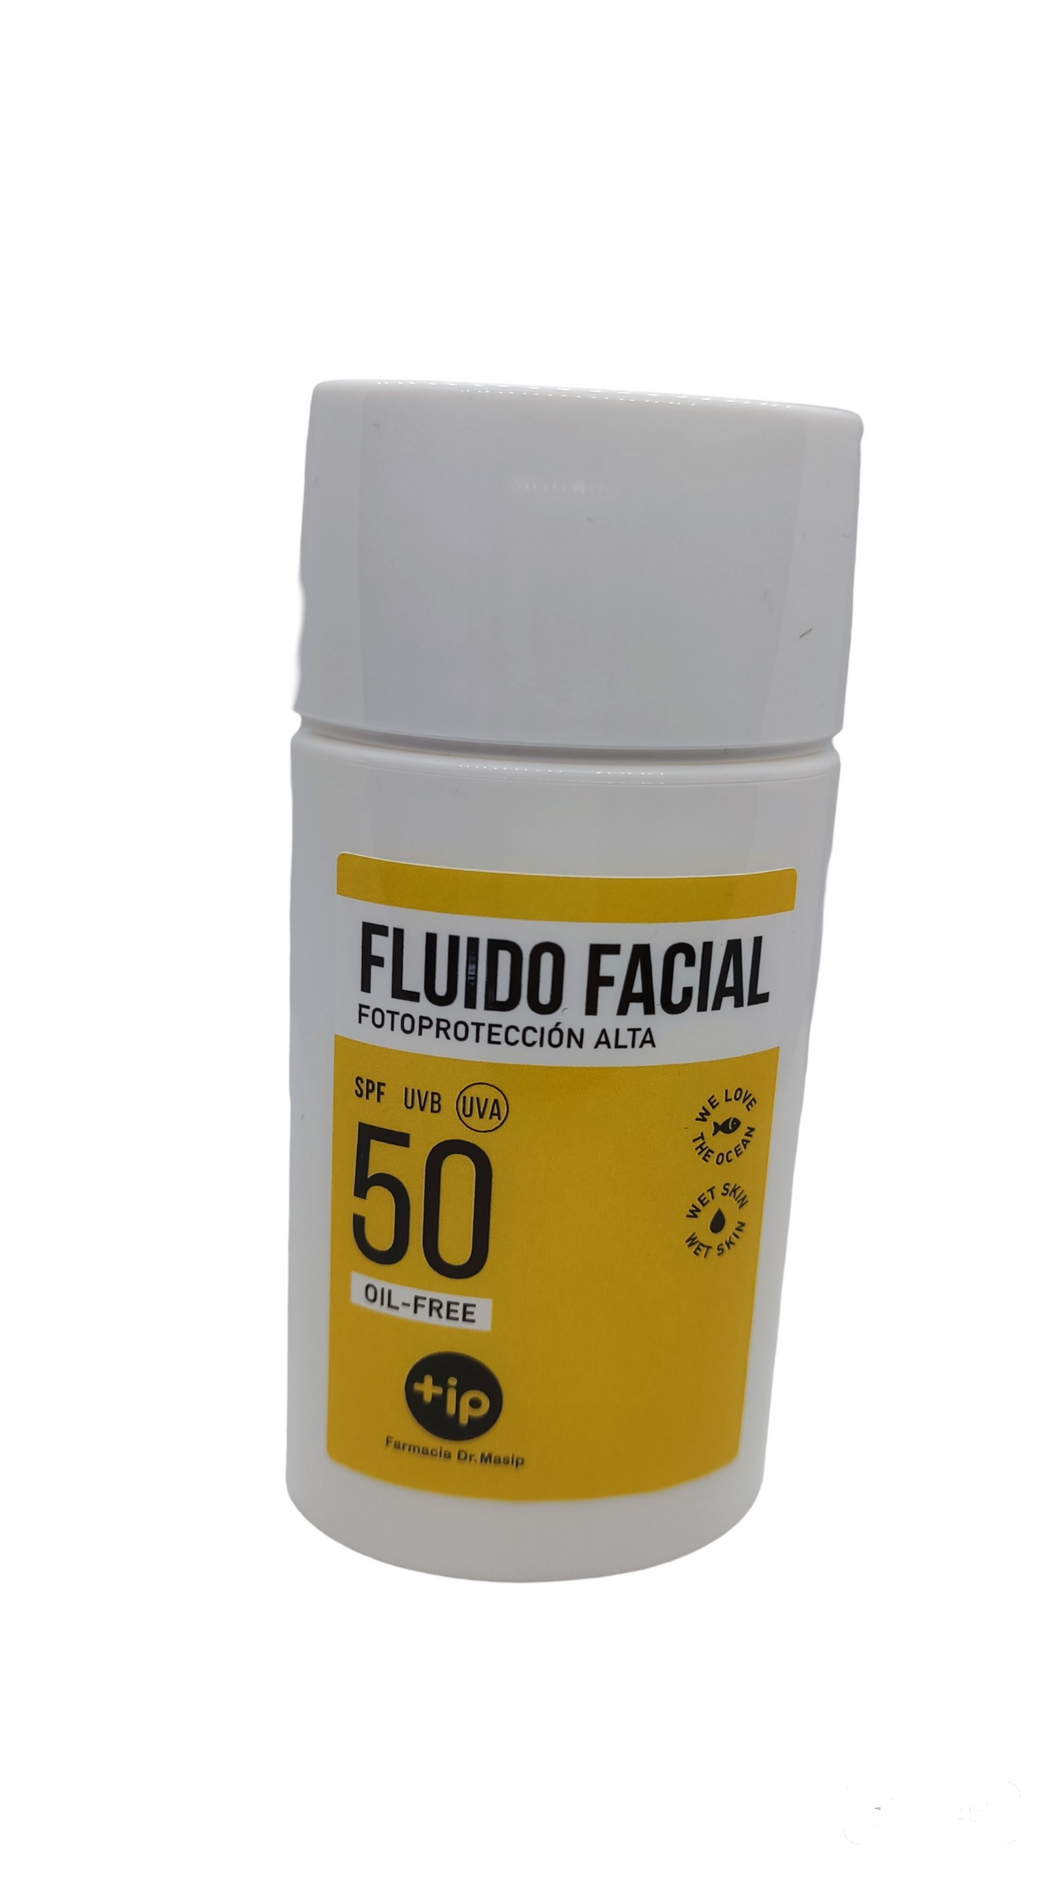 FLUIDO FACIAL OIL-FREE 50ml.